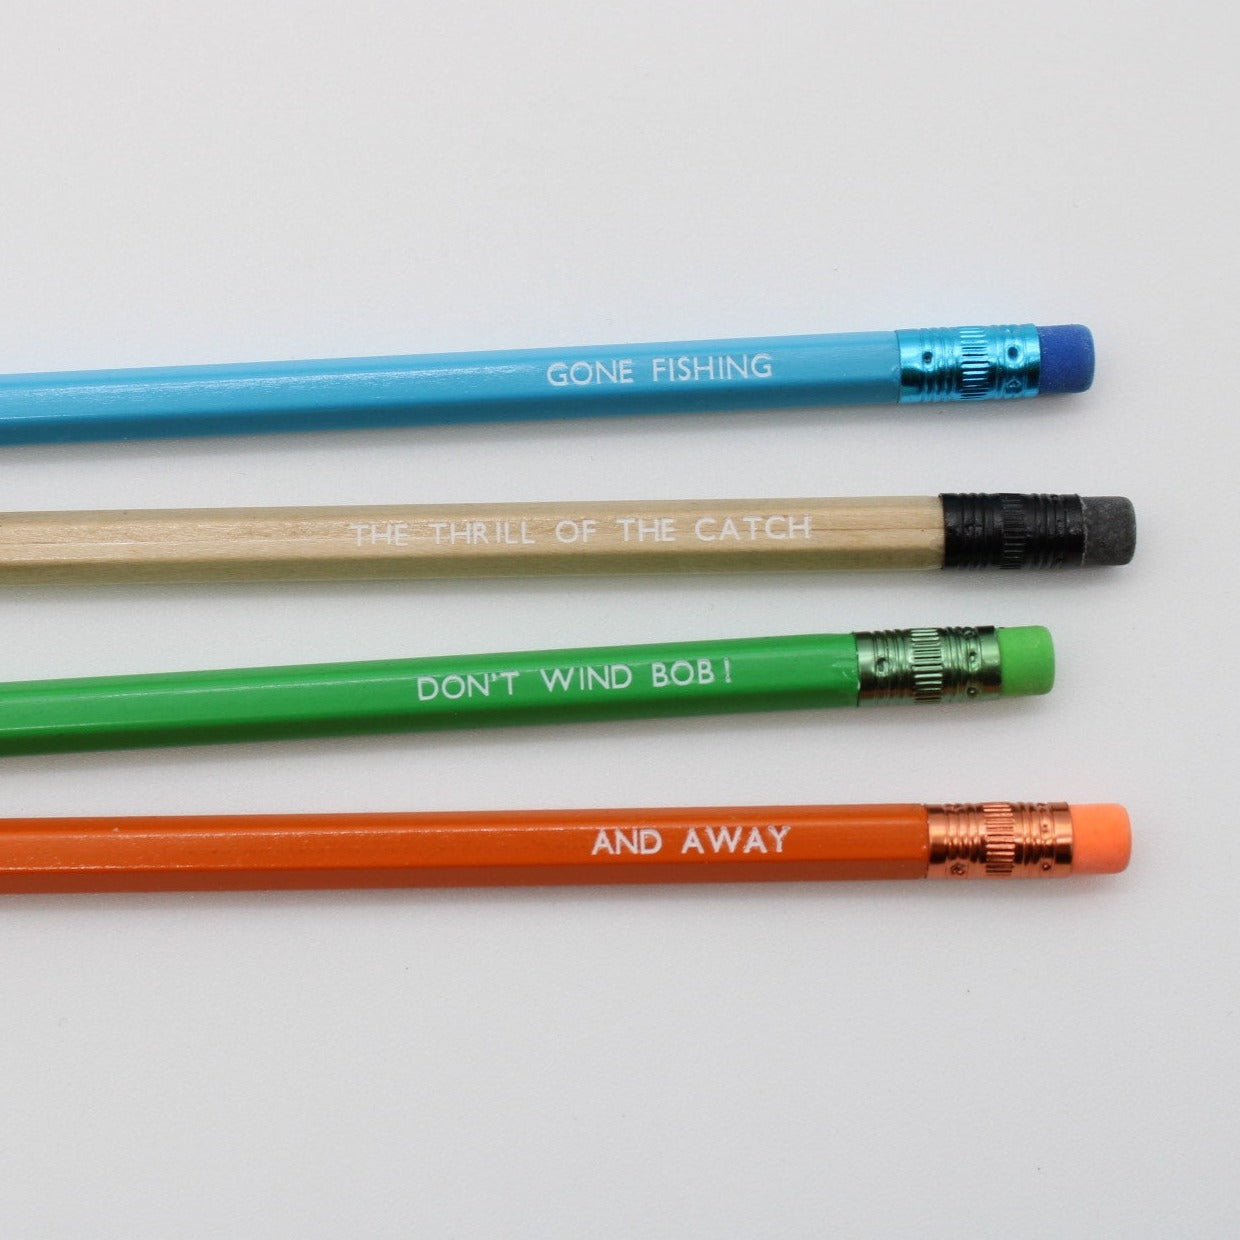 Gone Fishing pencil set